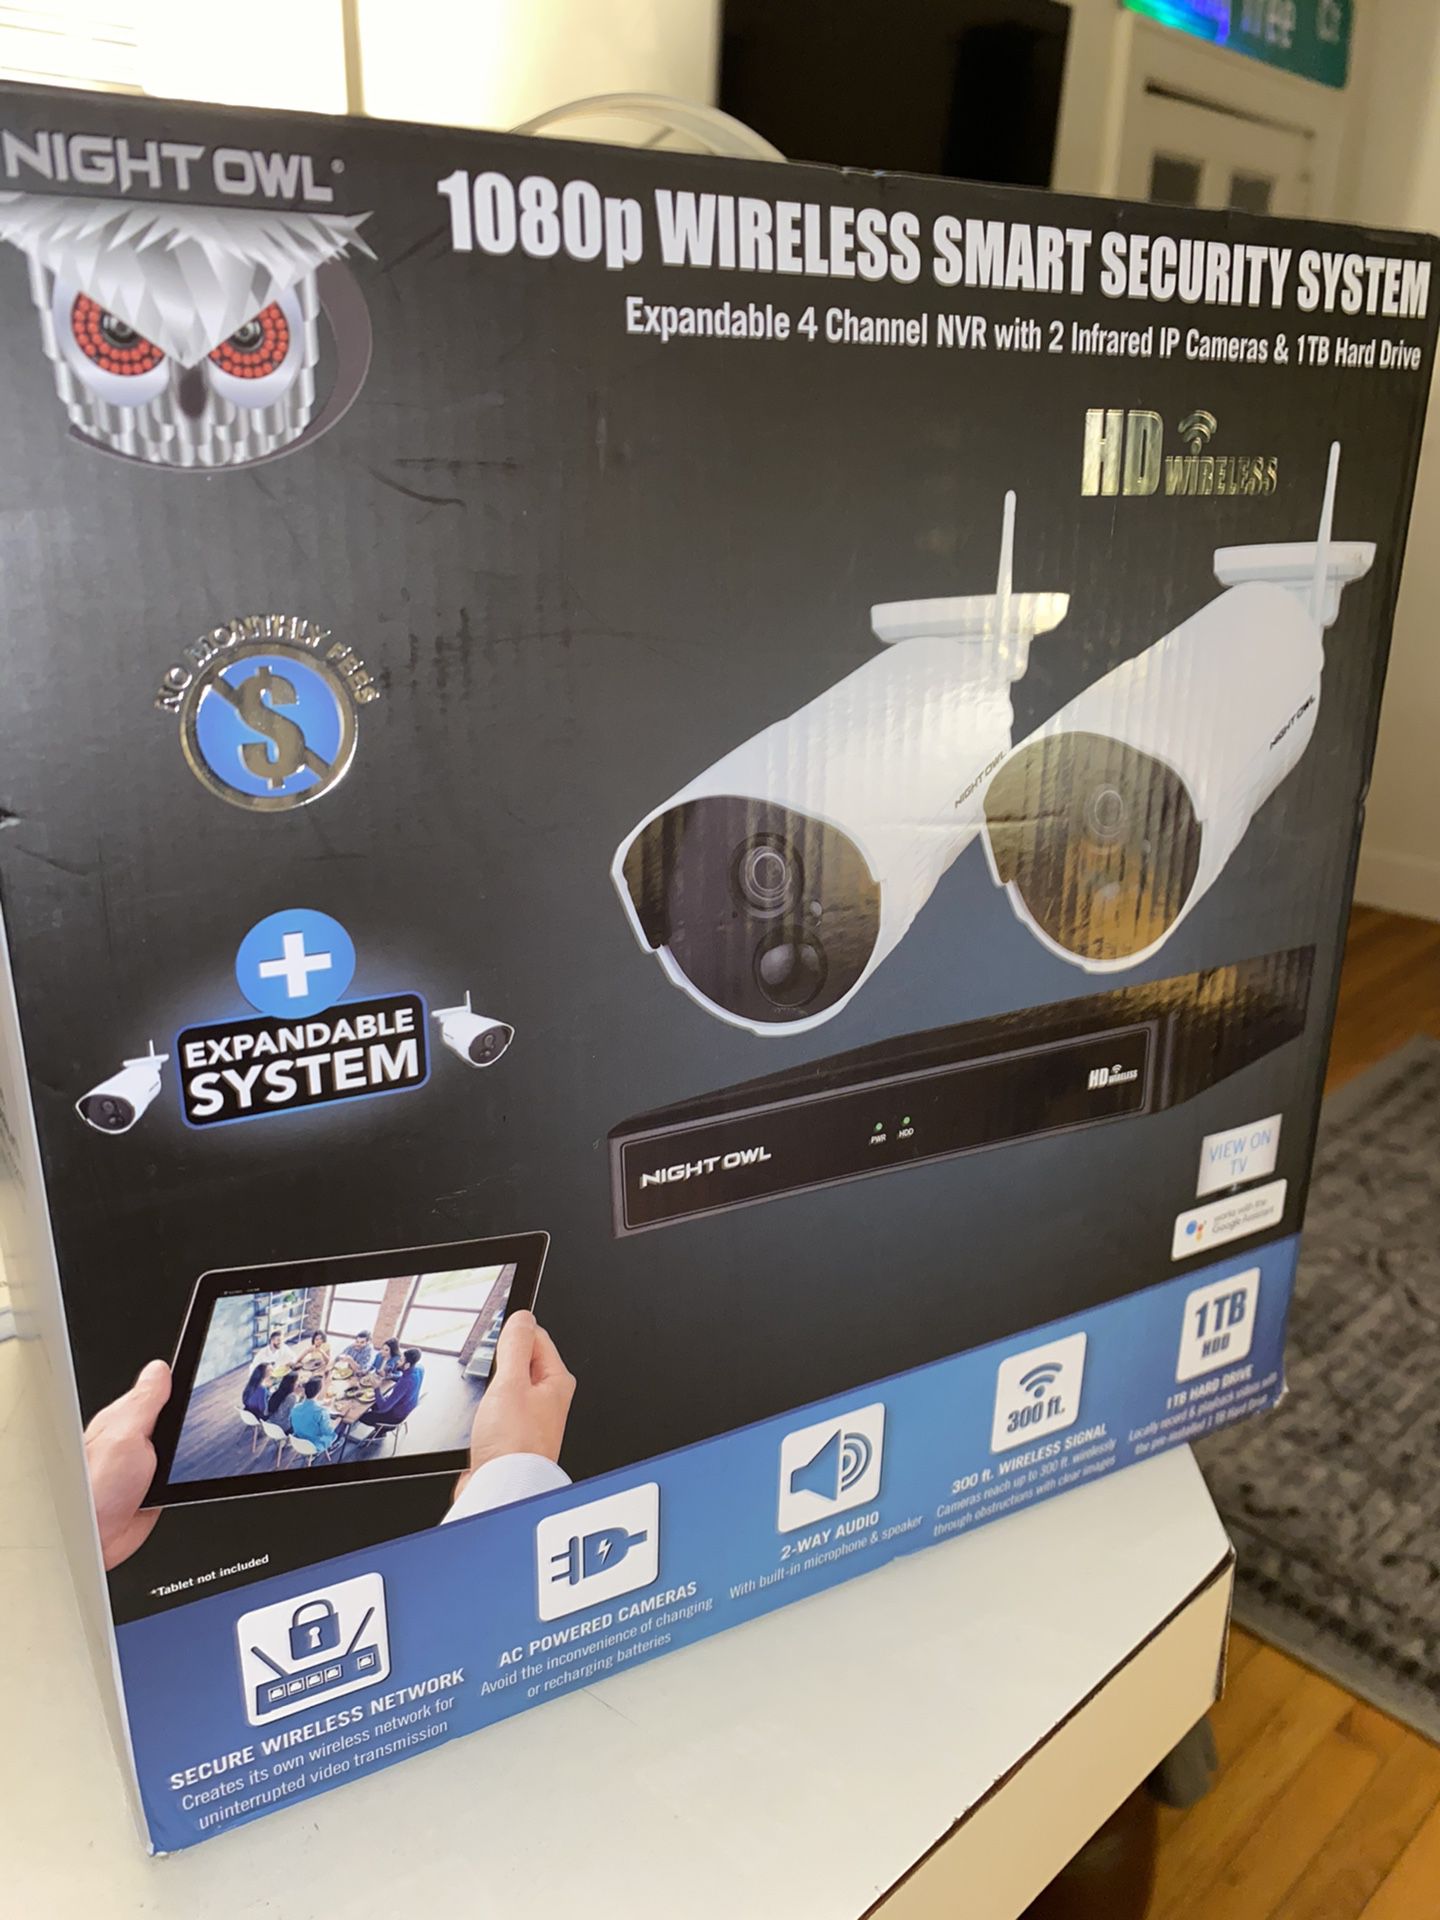 NIGHT OWL - 1080p WIRELESS SMART SECURITY SYSTEM